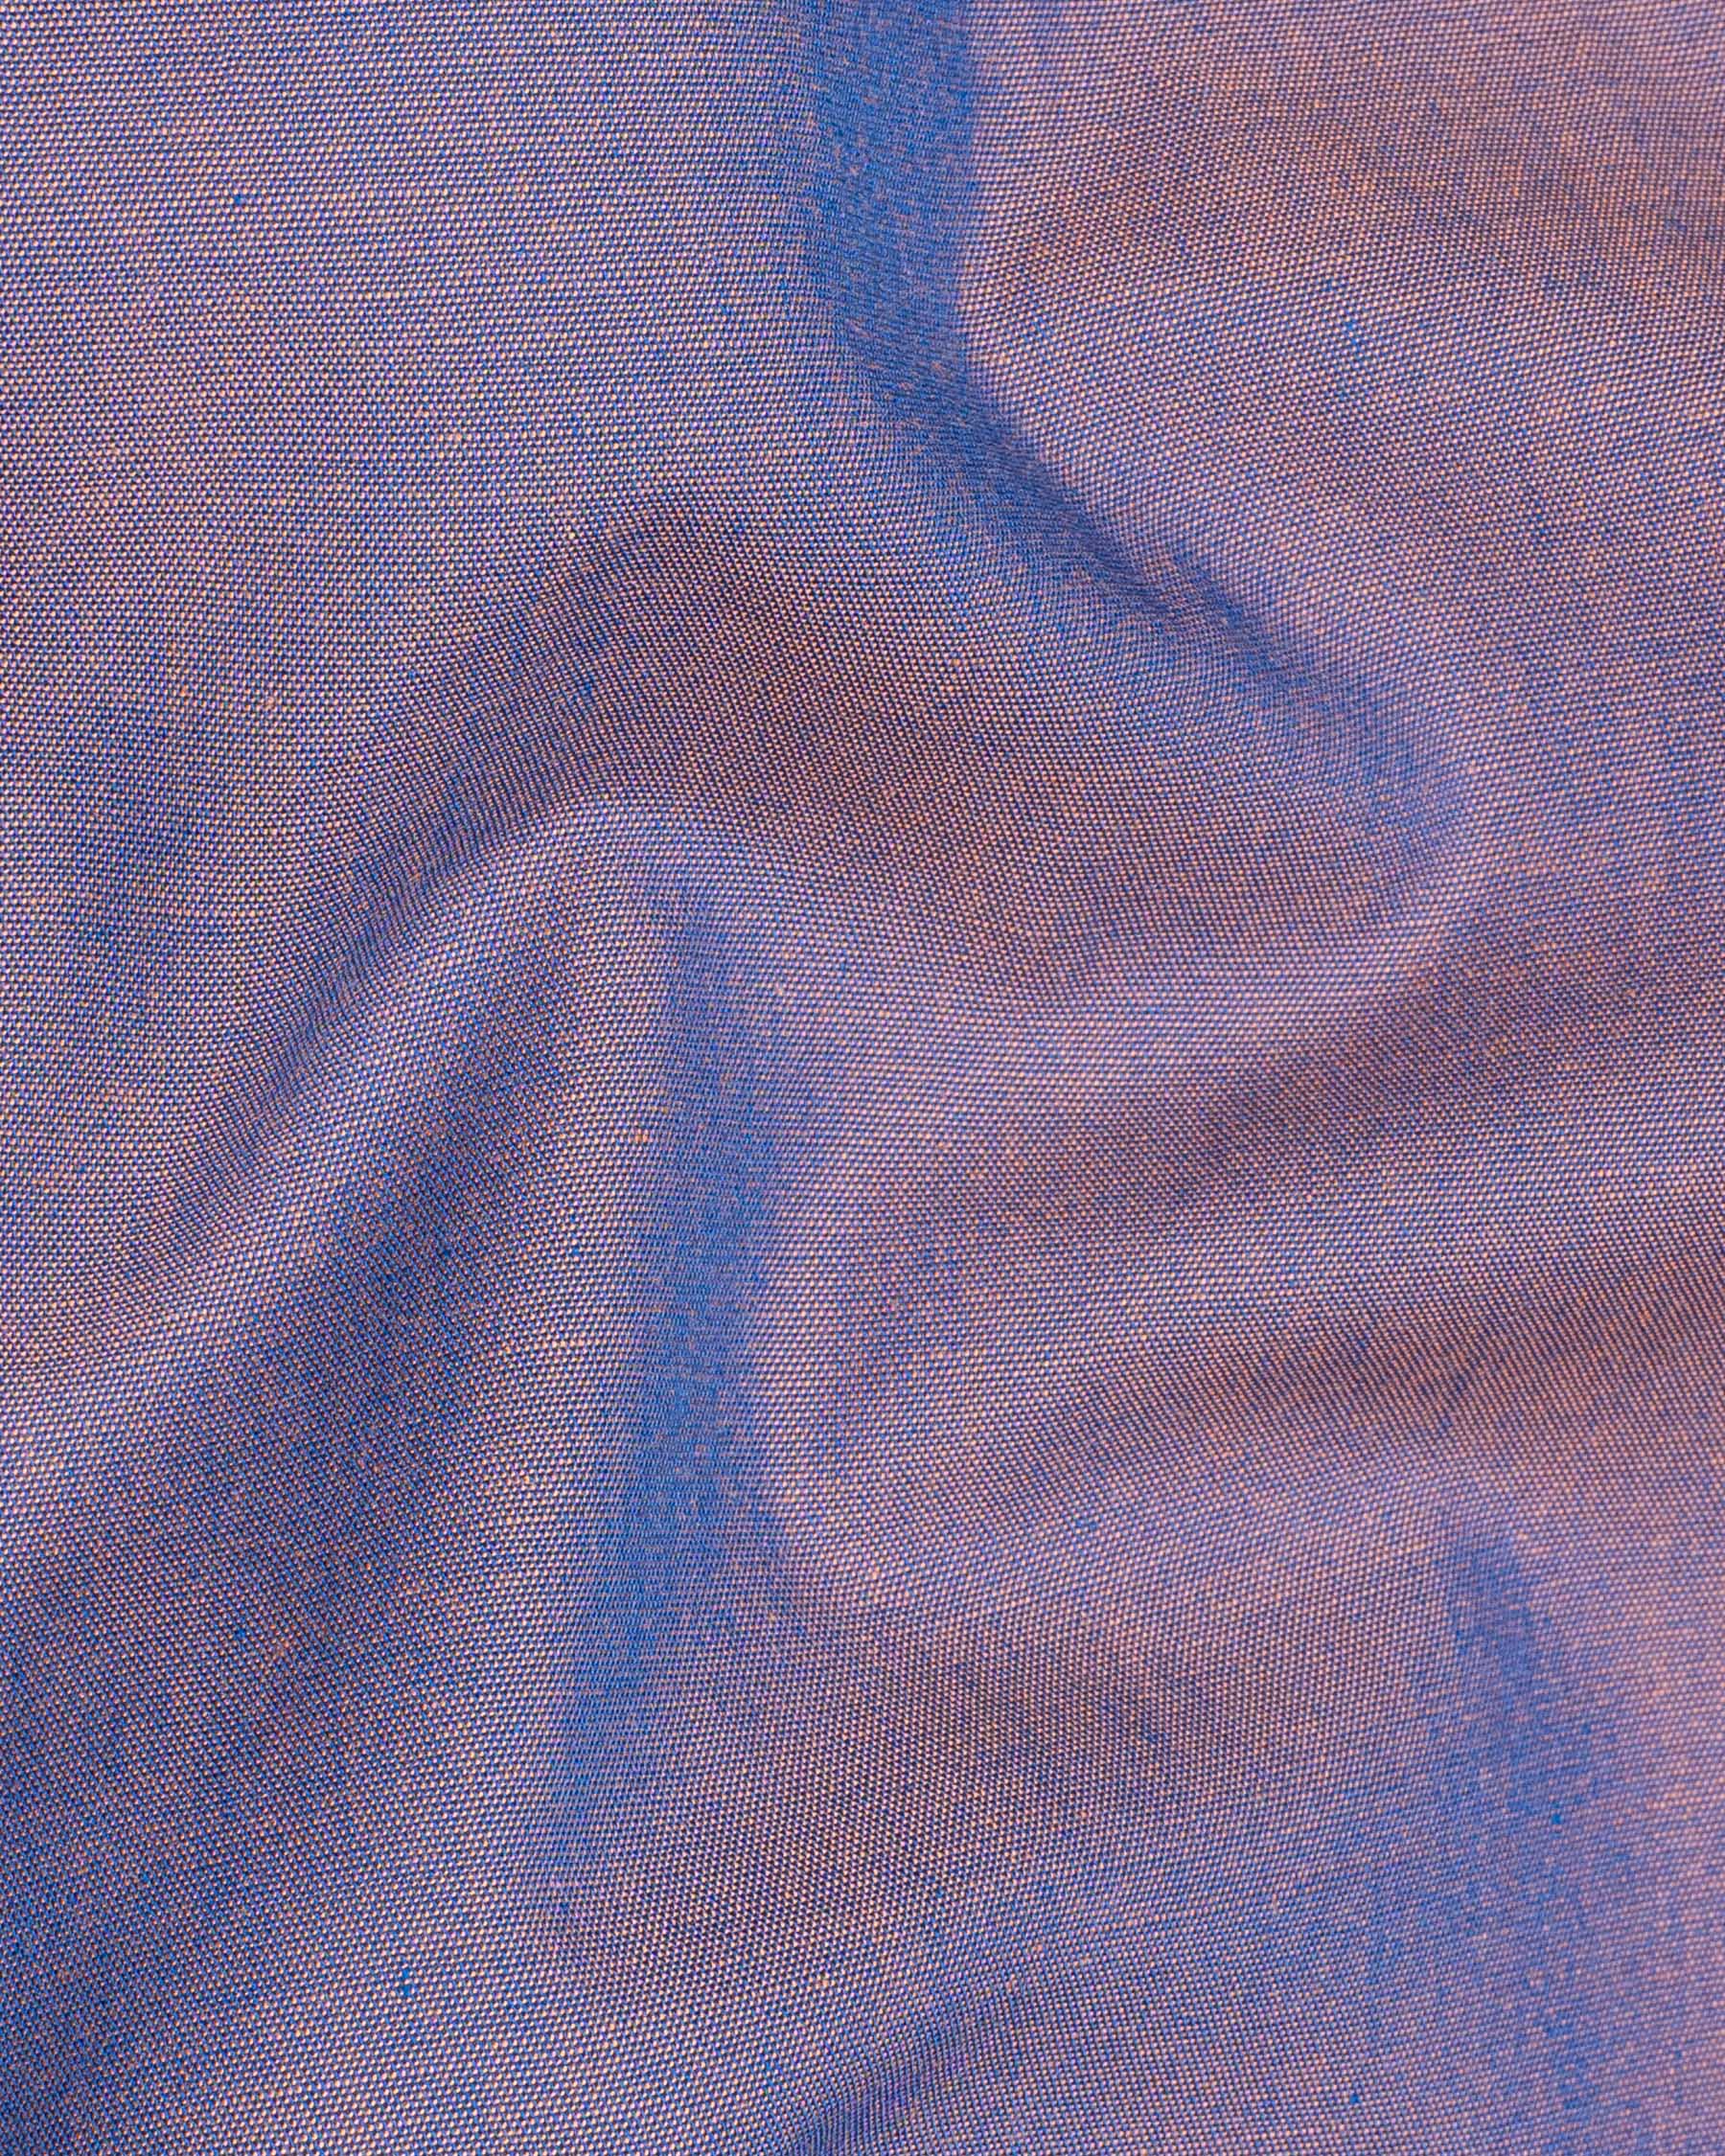 Chambray Blue and Rose Quartz Dual Tone Chambray Textured Premium Cotton Shirt 7054-CA-38, 7054-CA-H-38, 7054-CA-39, 7054-CA-H-39, 7054-CA-40, 7054-CA-H-40, 7054-CA-42, 7054-CA-H-42, 7054-CA-44, 7054-CA-H-44, 7054-CA-46, 7054-CA-H-46, 7054-CA-48, 7054-CA-H-48, 7054-CA-50, 7054-CA-H-50, 7054-CA-52, 7054-CA-H-52